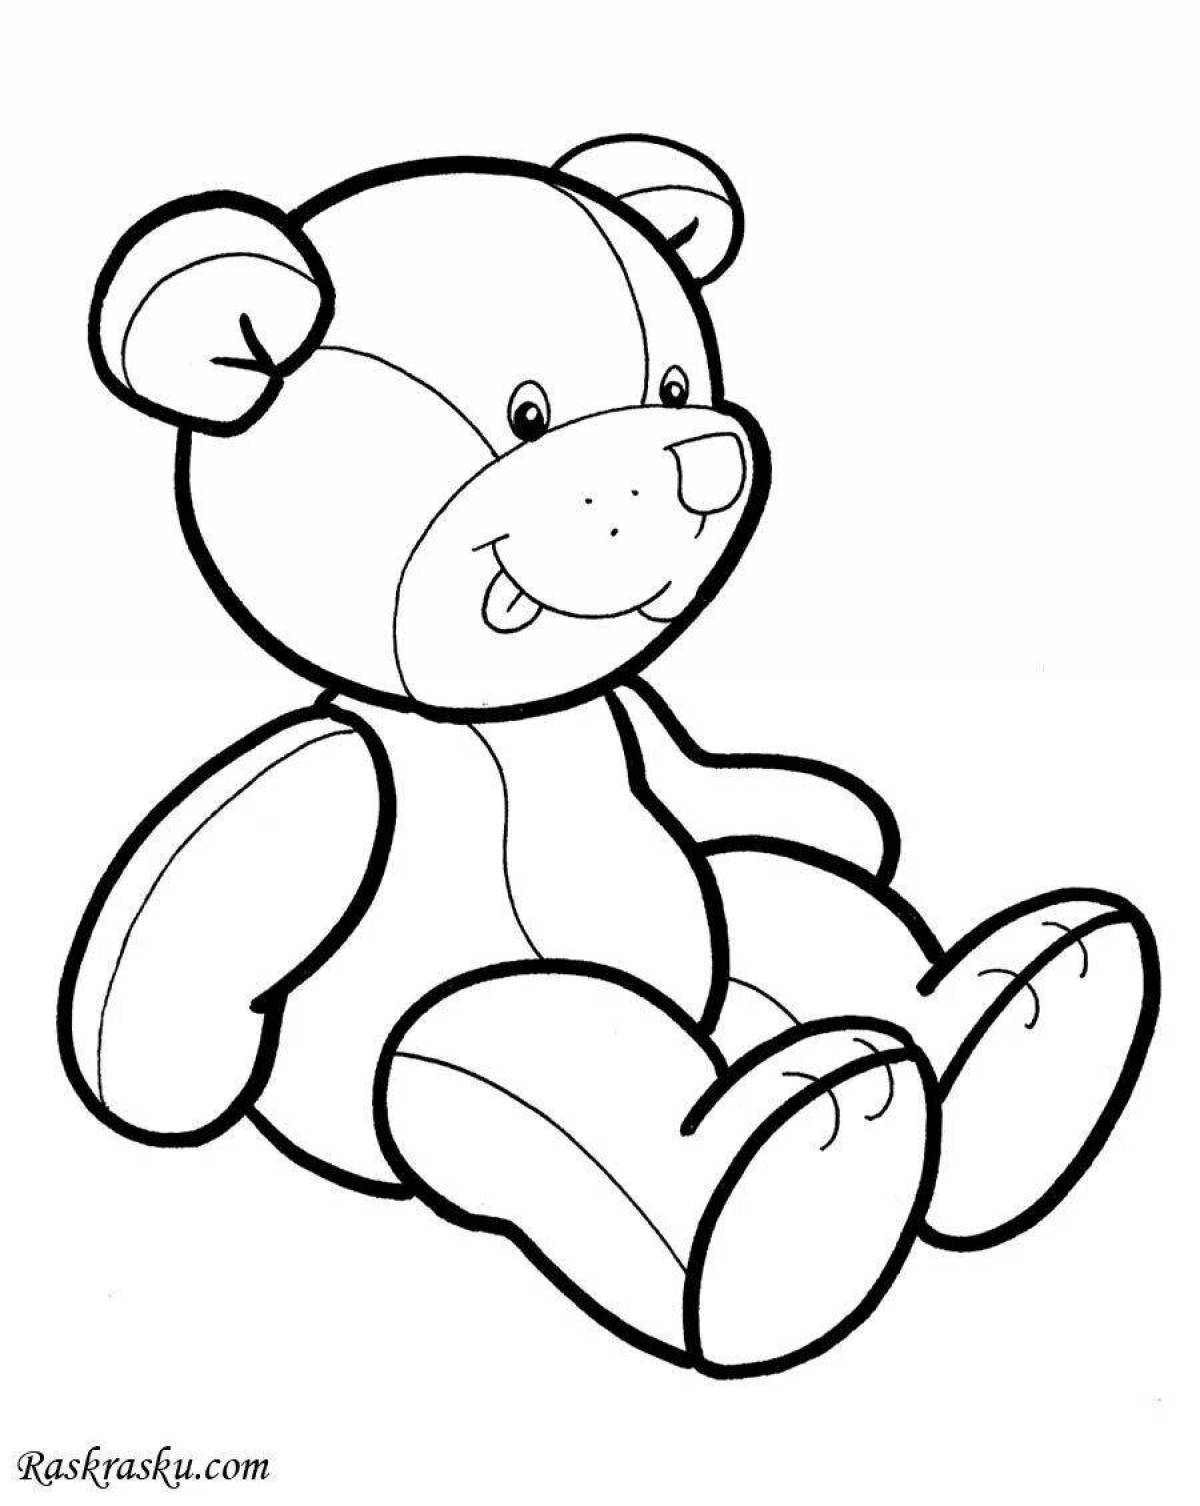 Coloring book funny teddy bear